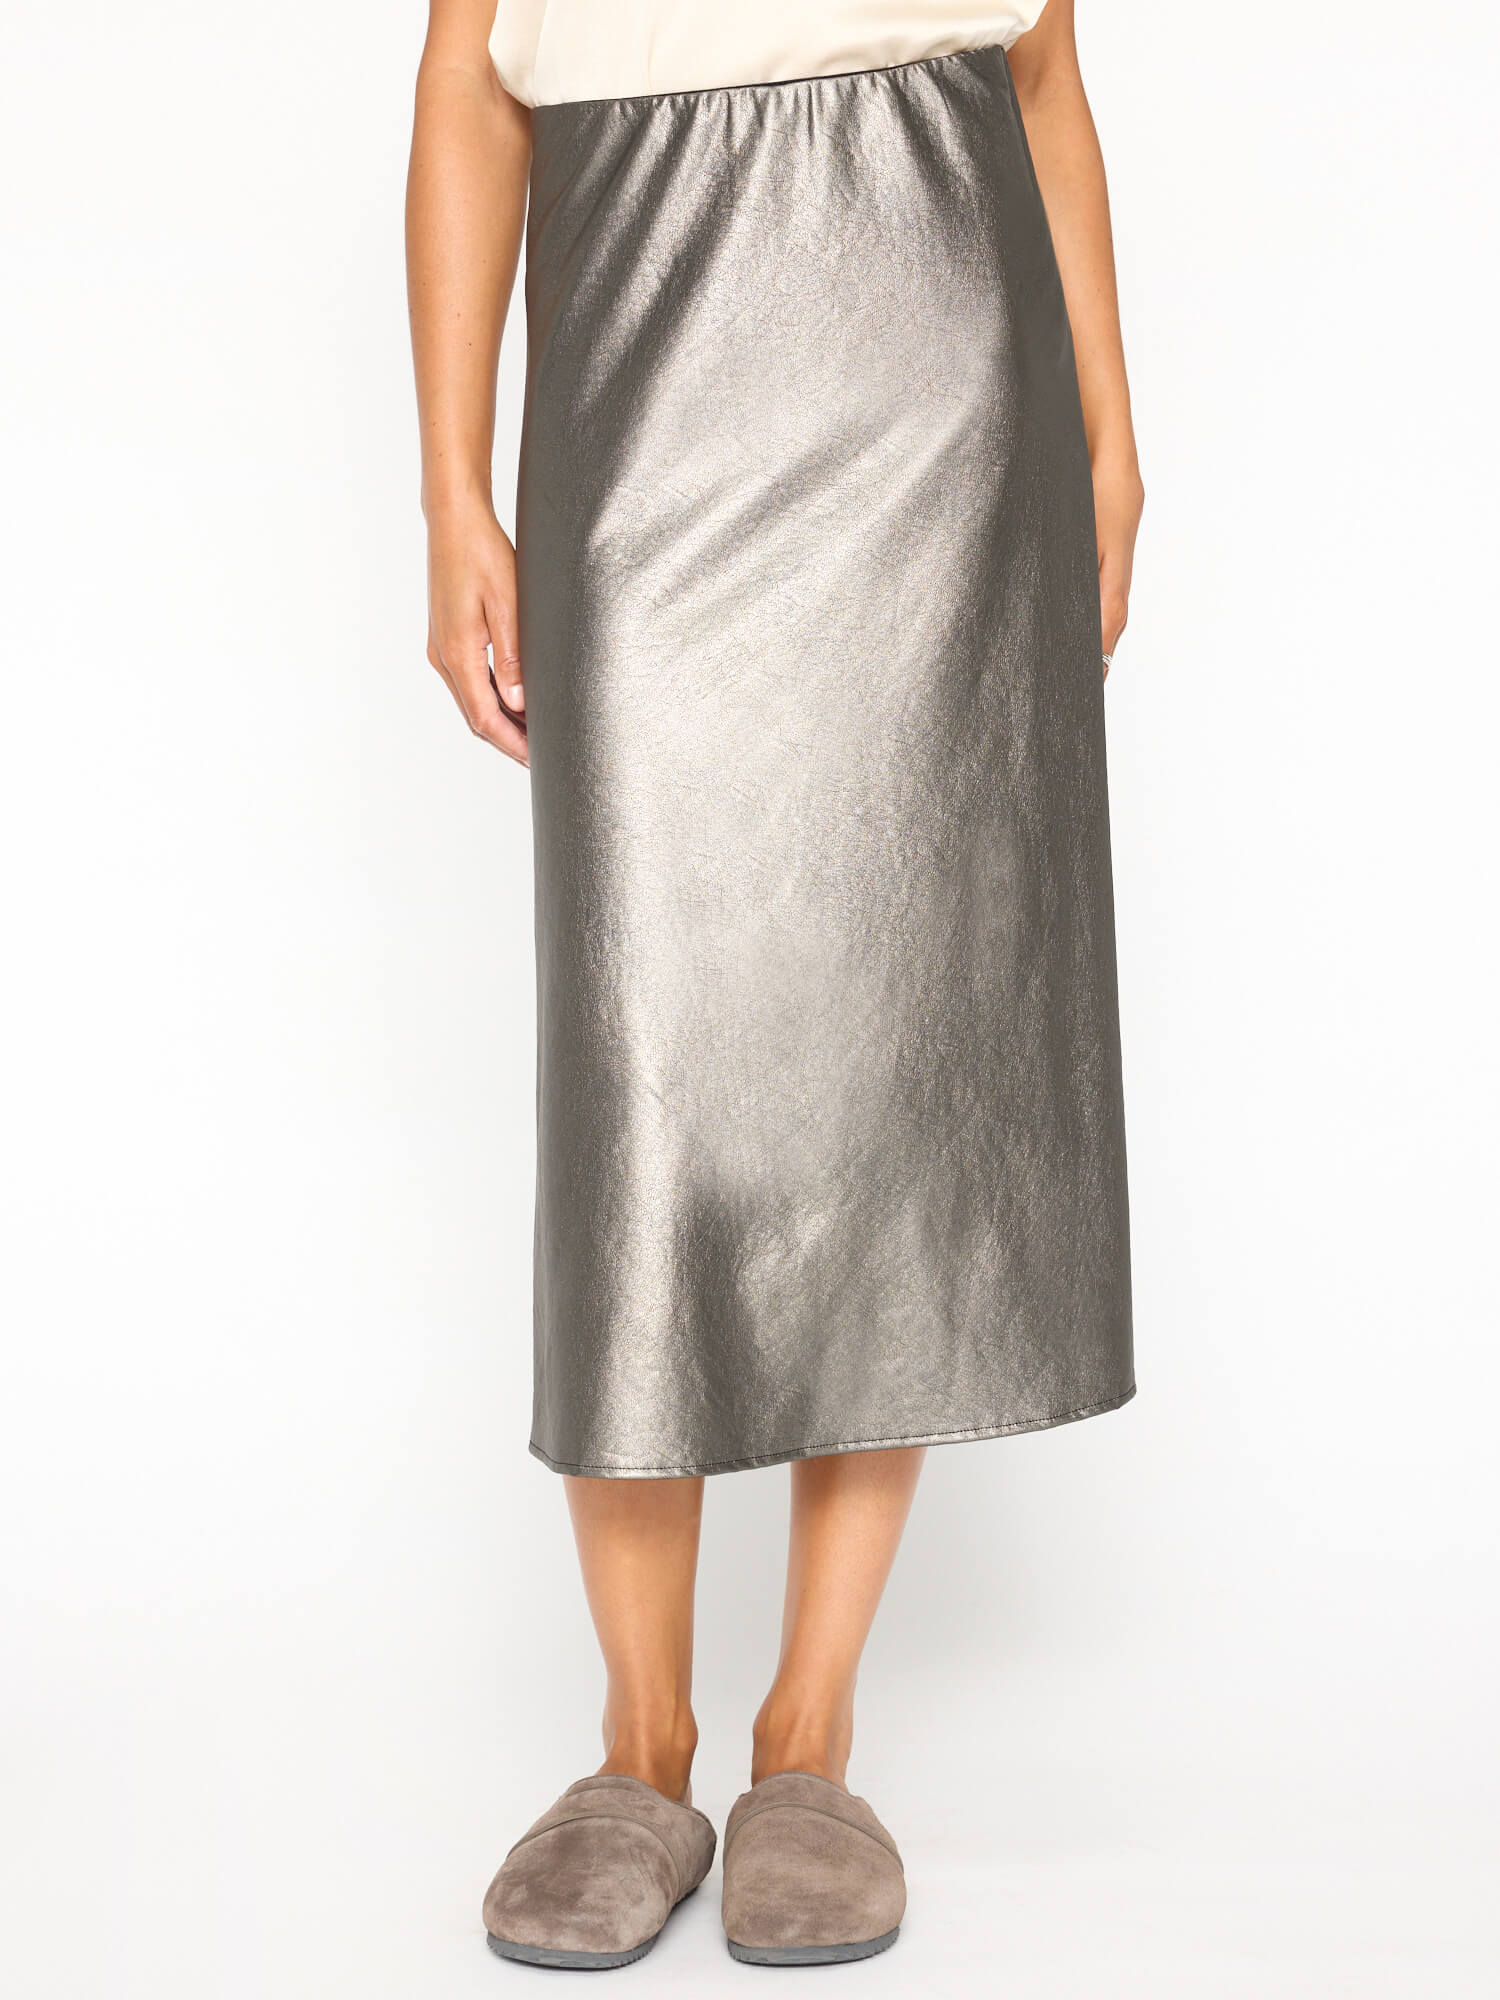 Hallie vegan leather metallic grey midi skirt front view